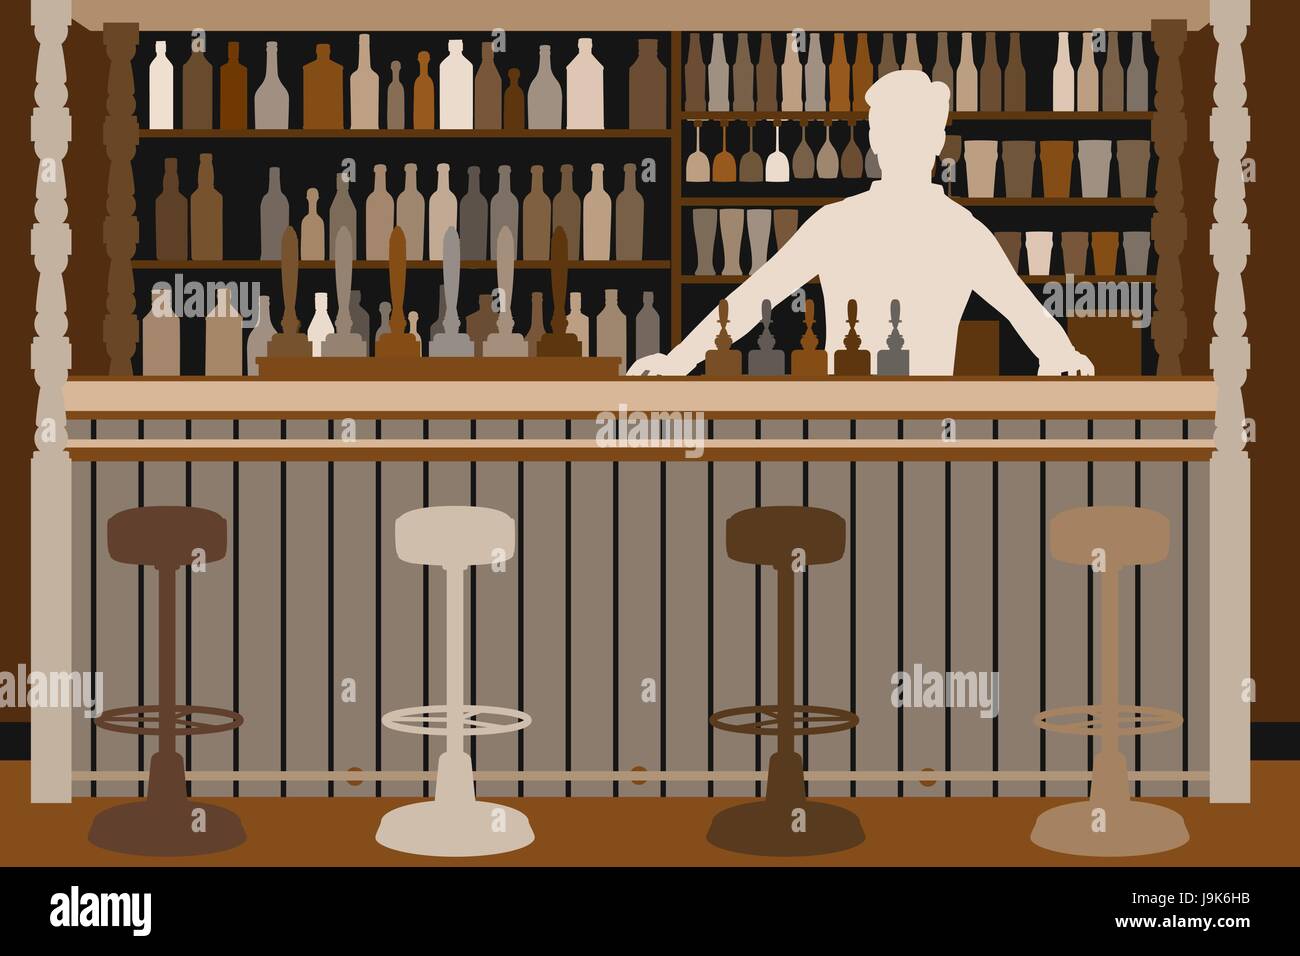 Editable vector illustration of a barman at his well stocked bar Stock Vector